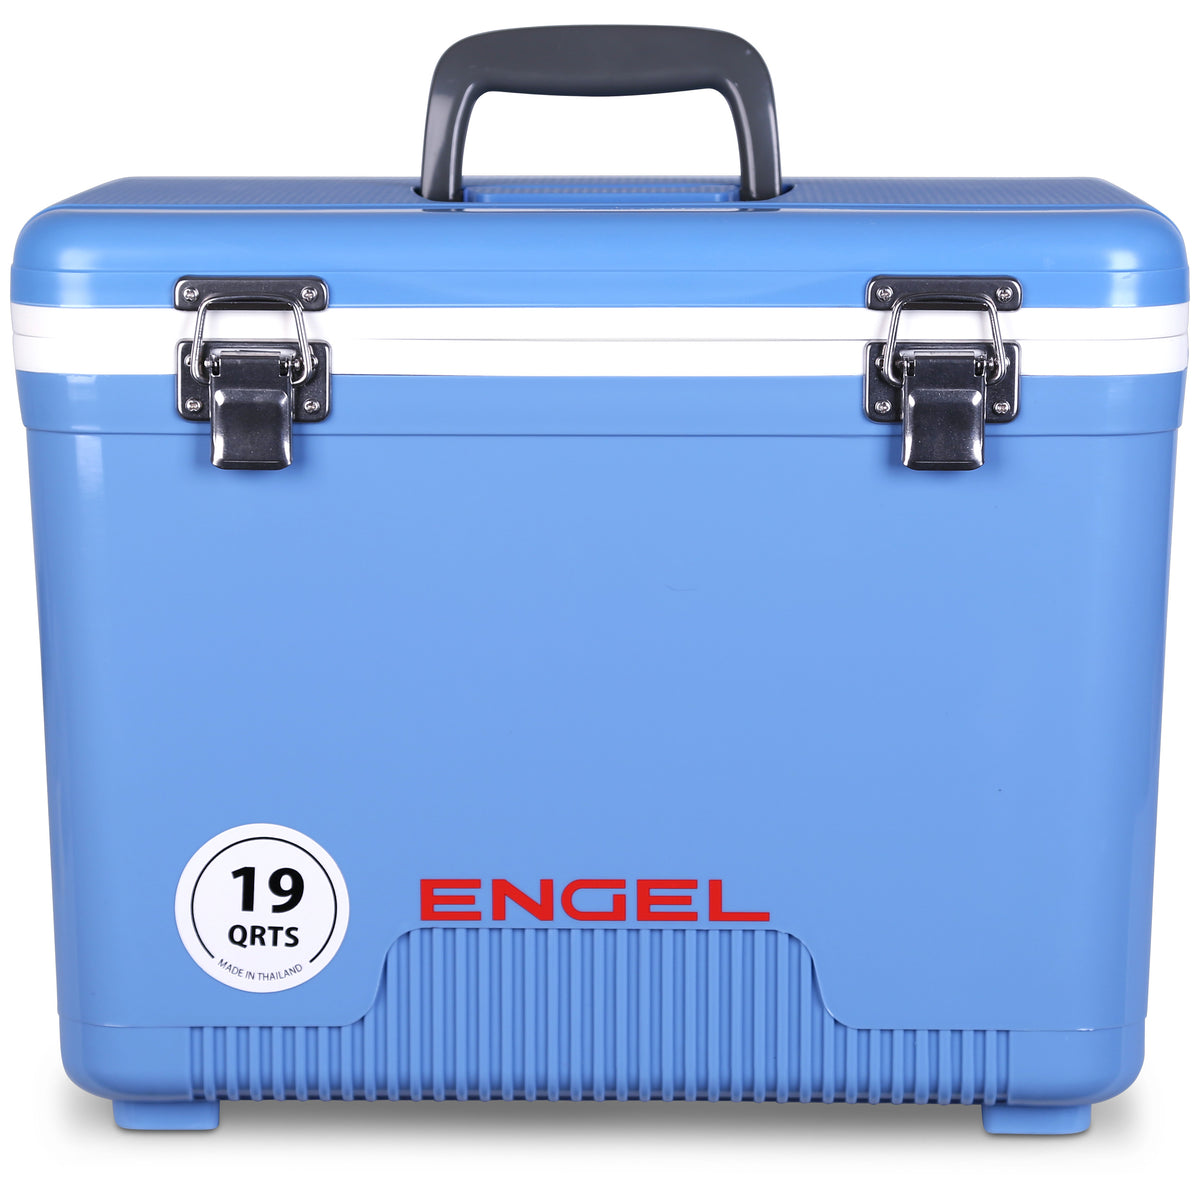 Engel 19 Quart Drybox/Cooler - Blue